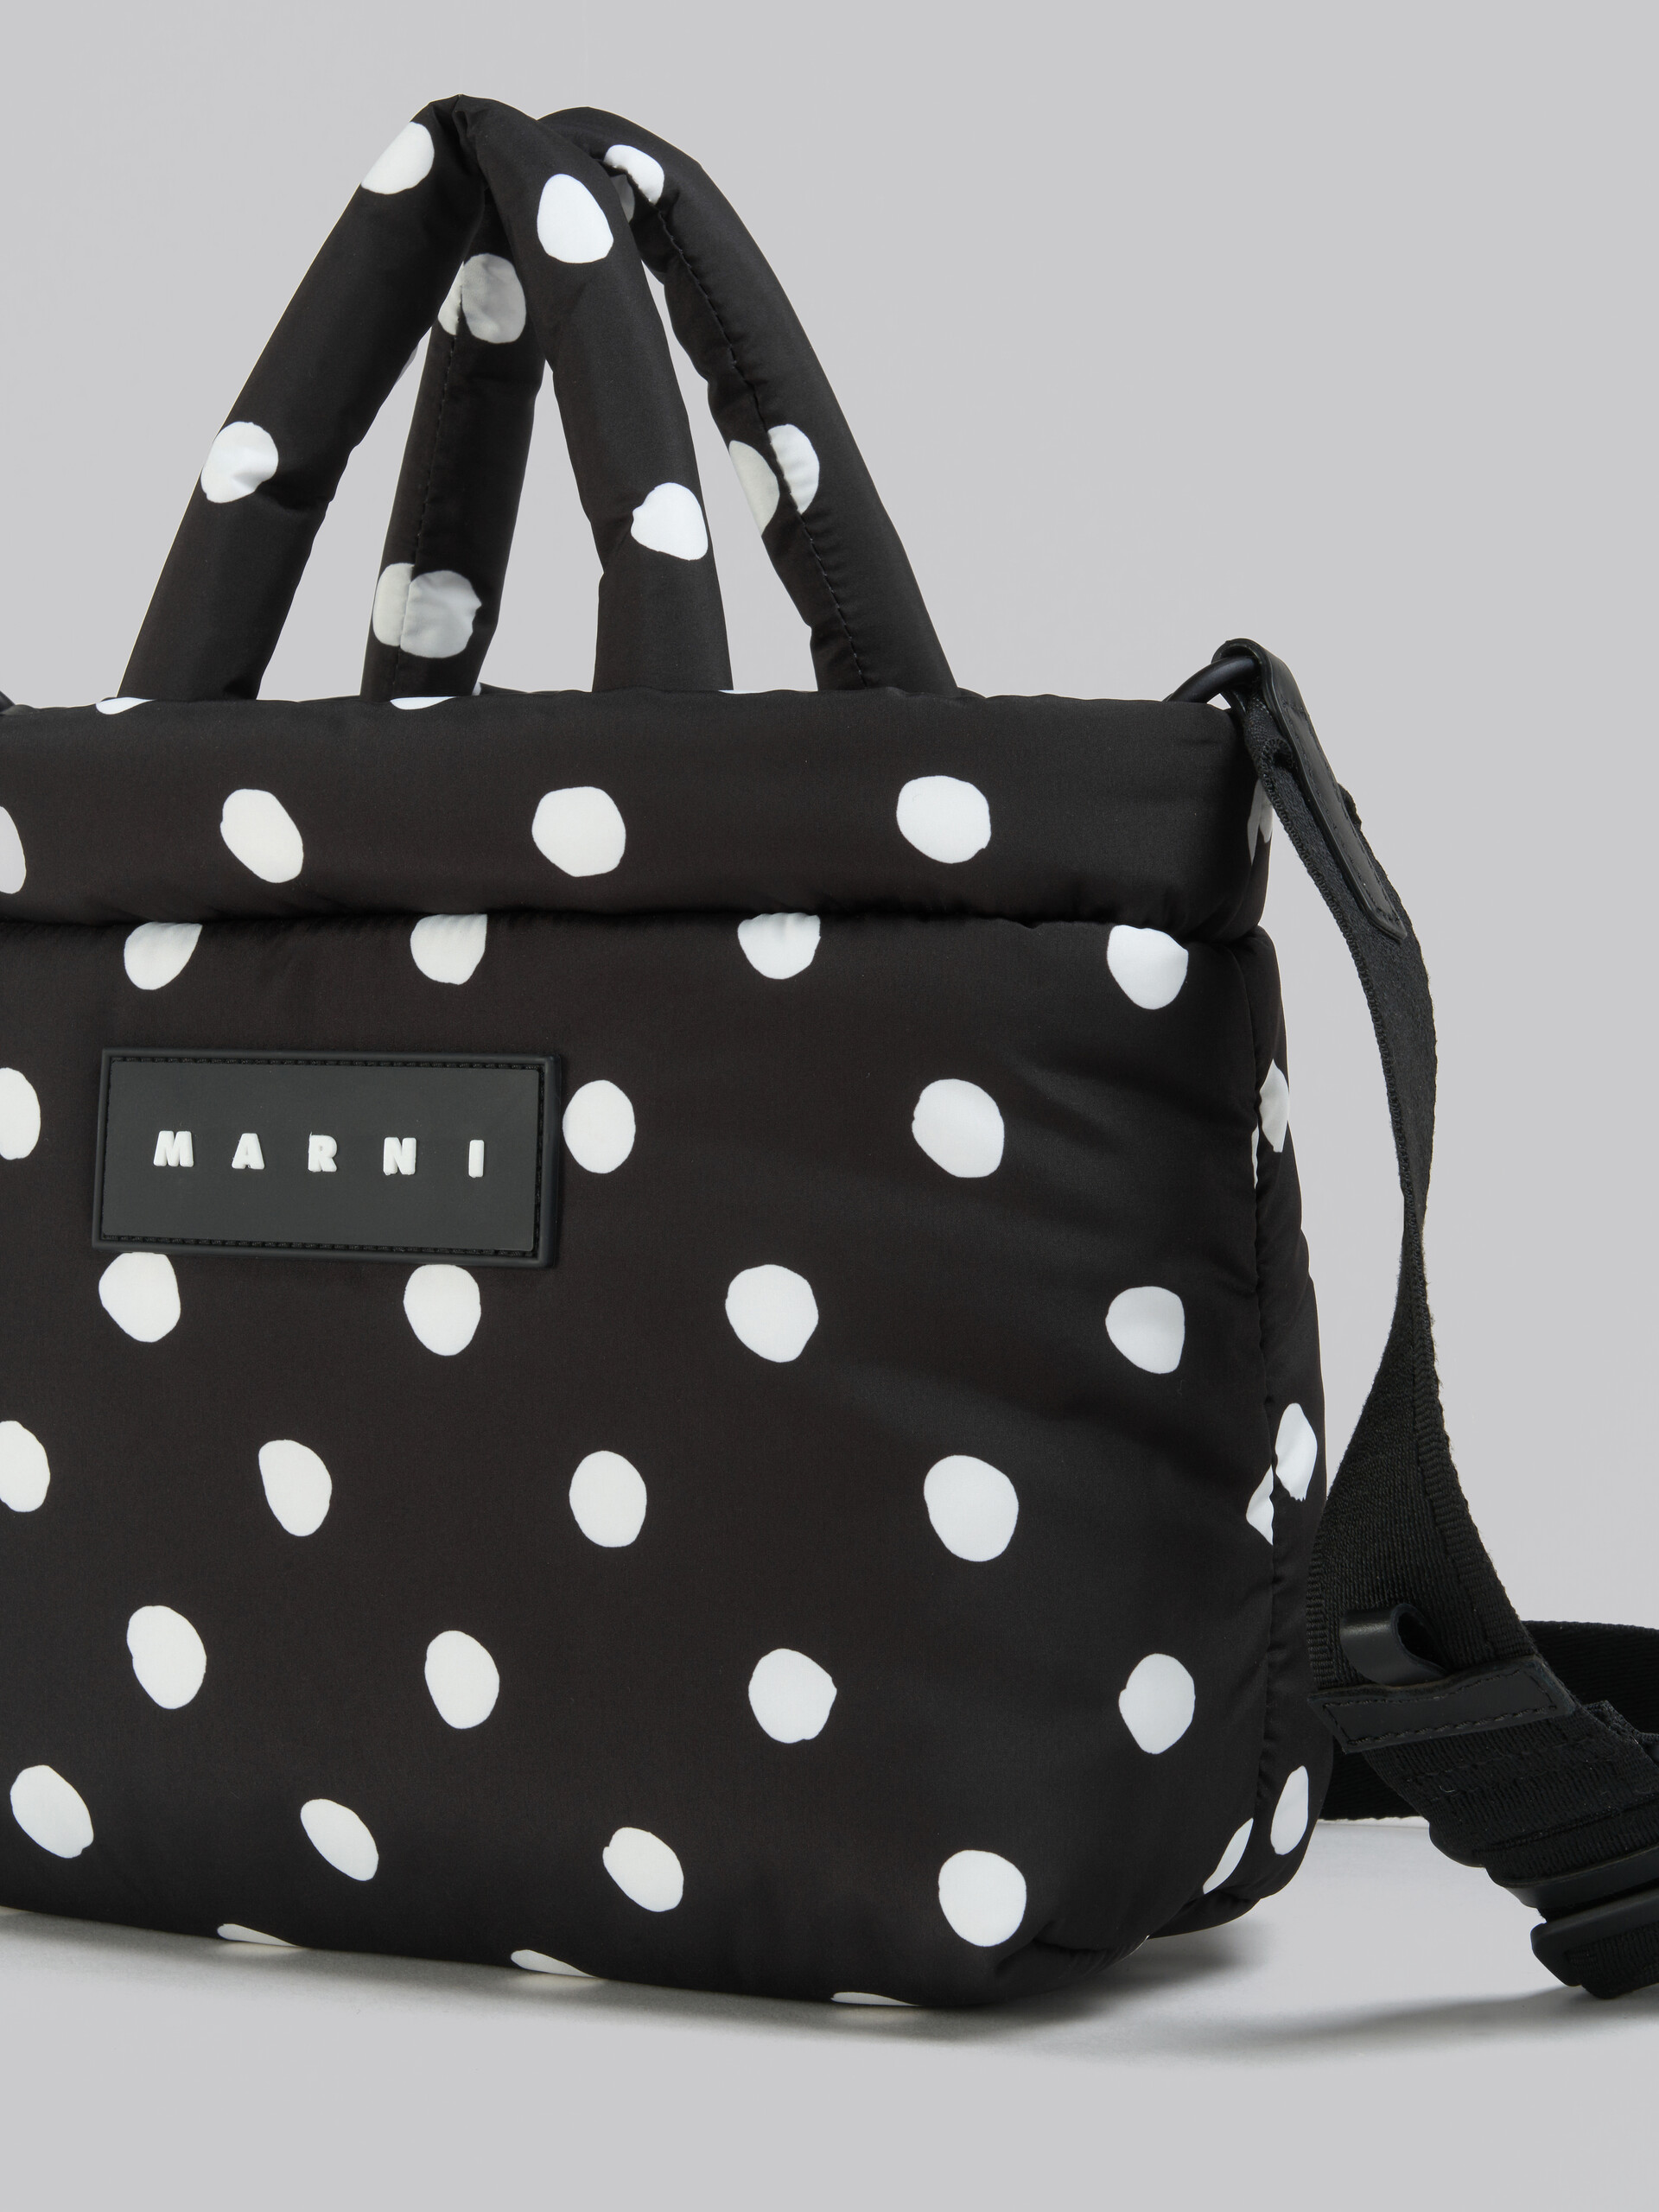 Black polka-dot Puff mini tote bag - Handbag - Image 5